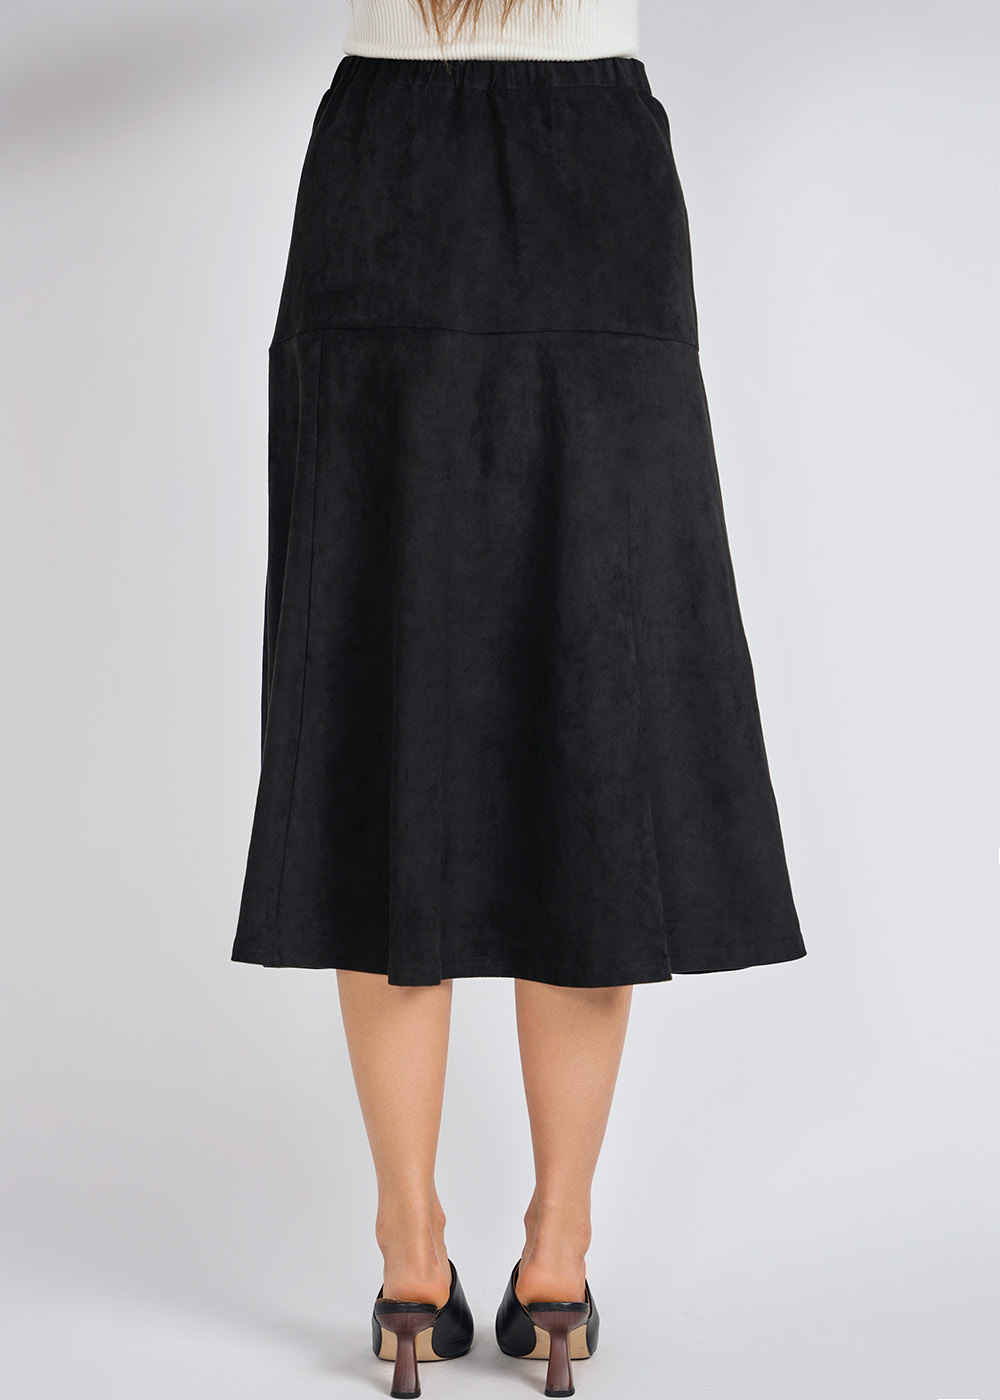 Simple Sophistication Black Suede Skirt